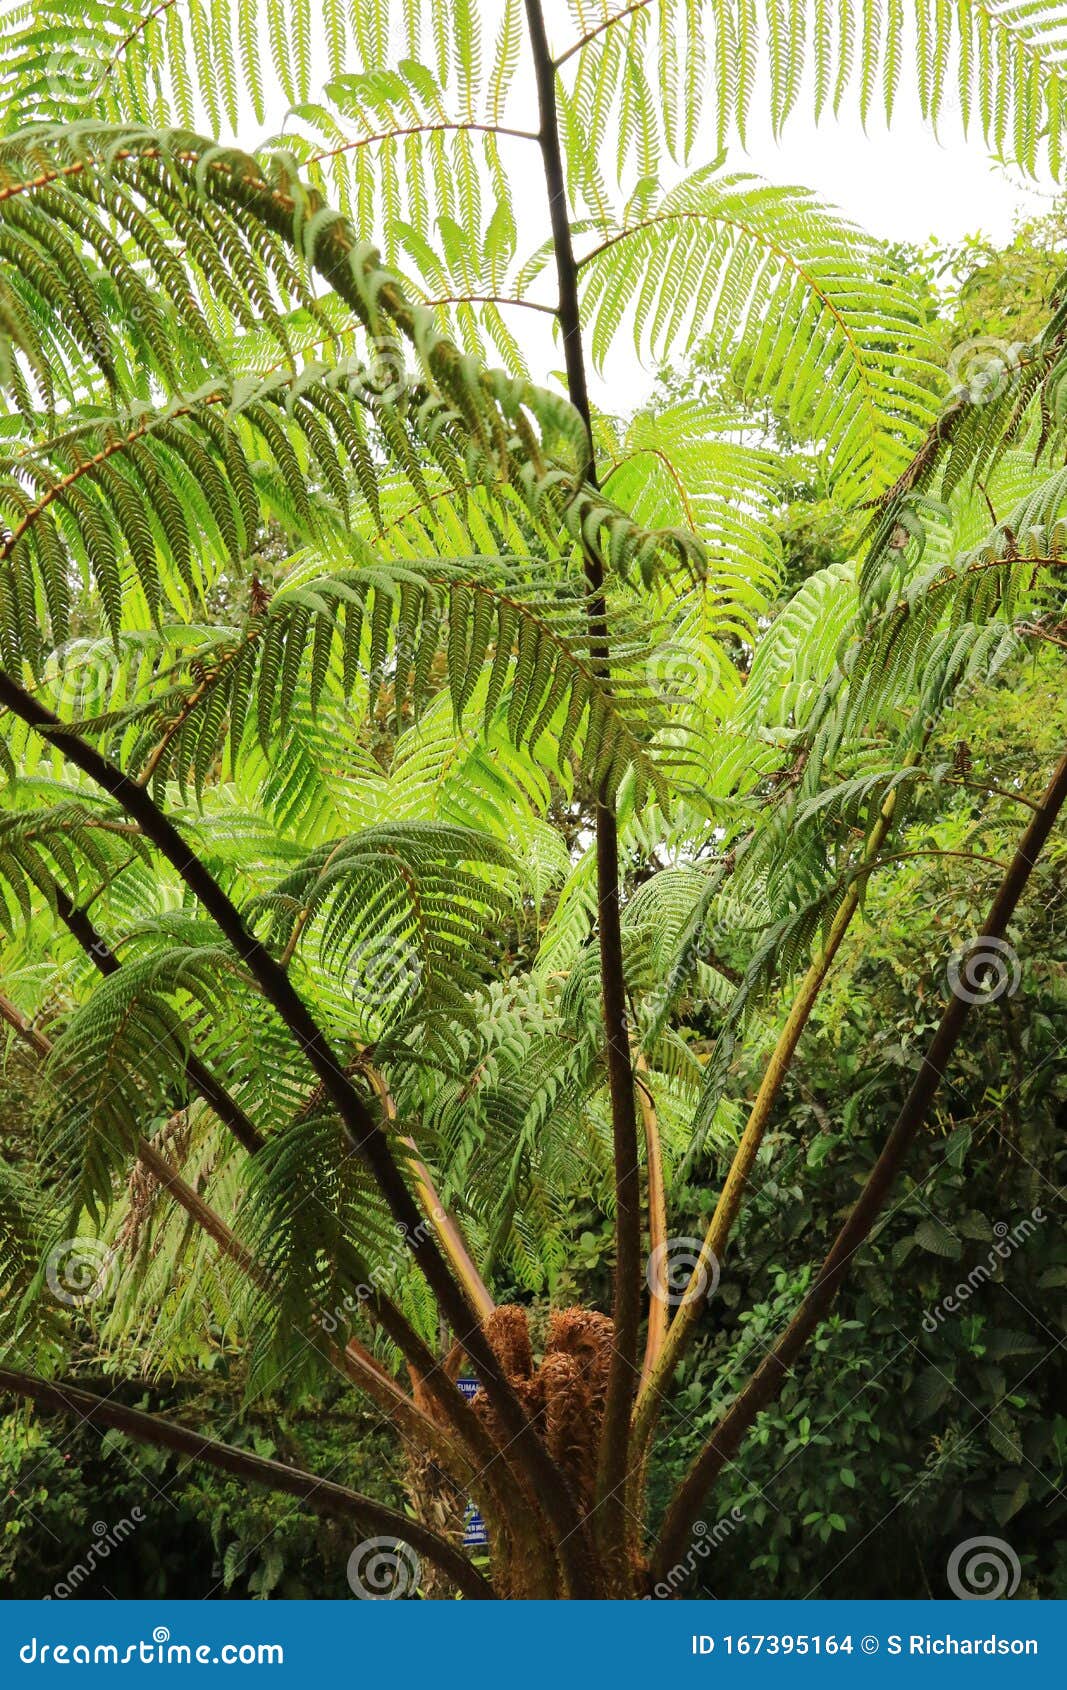 tree fern near pailon falls